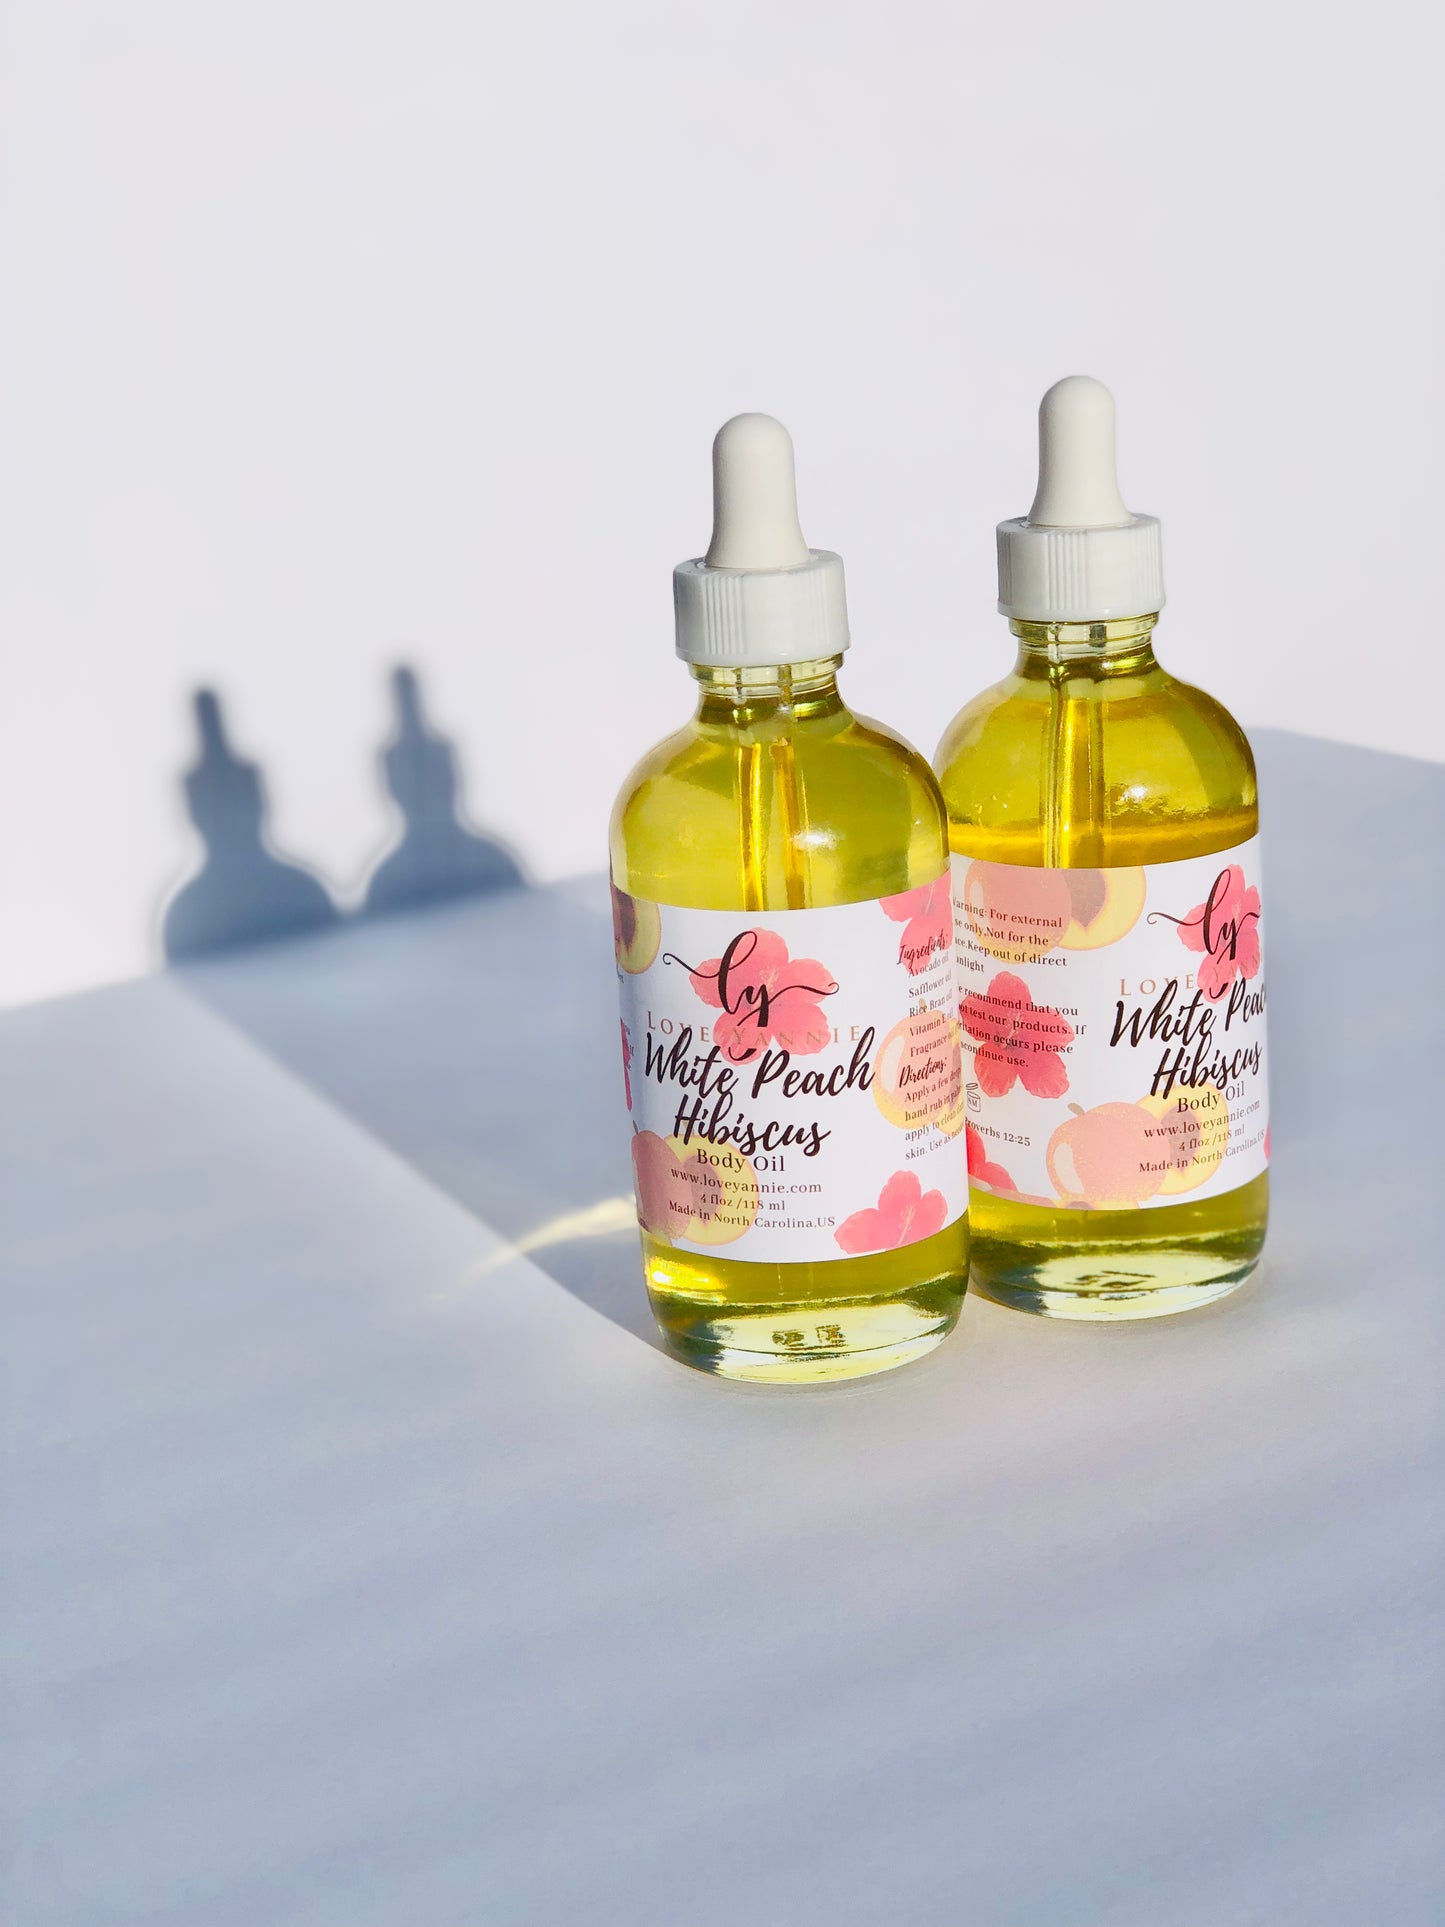 White Peach and Hibiscus Body Oil